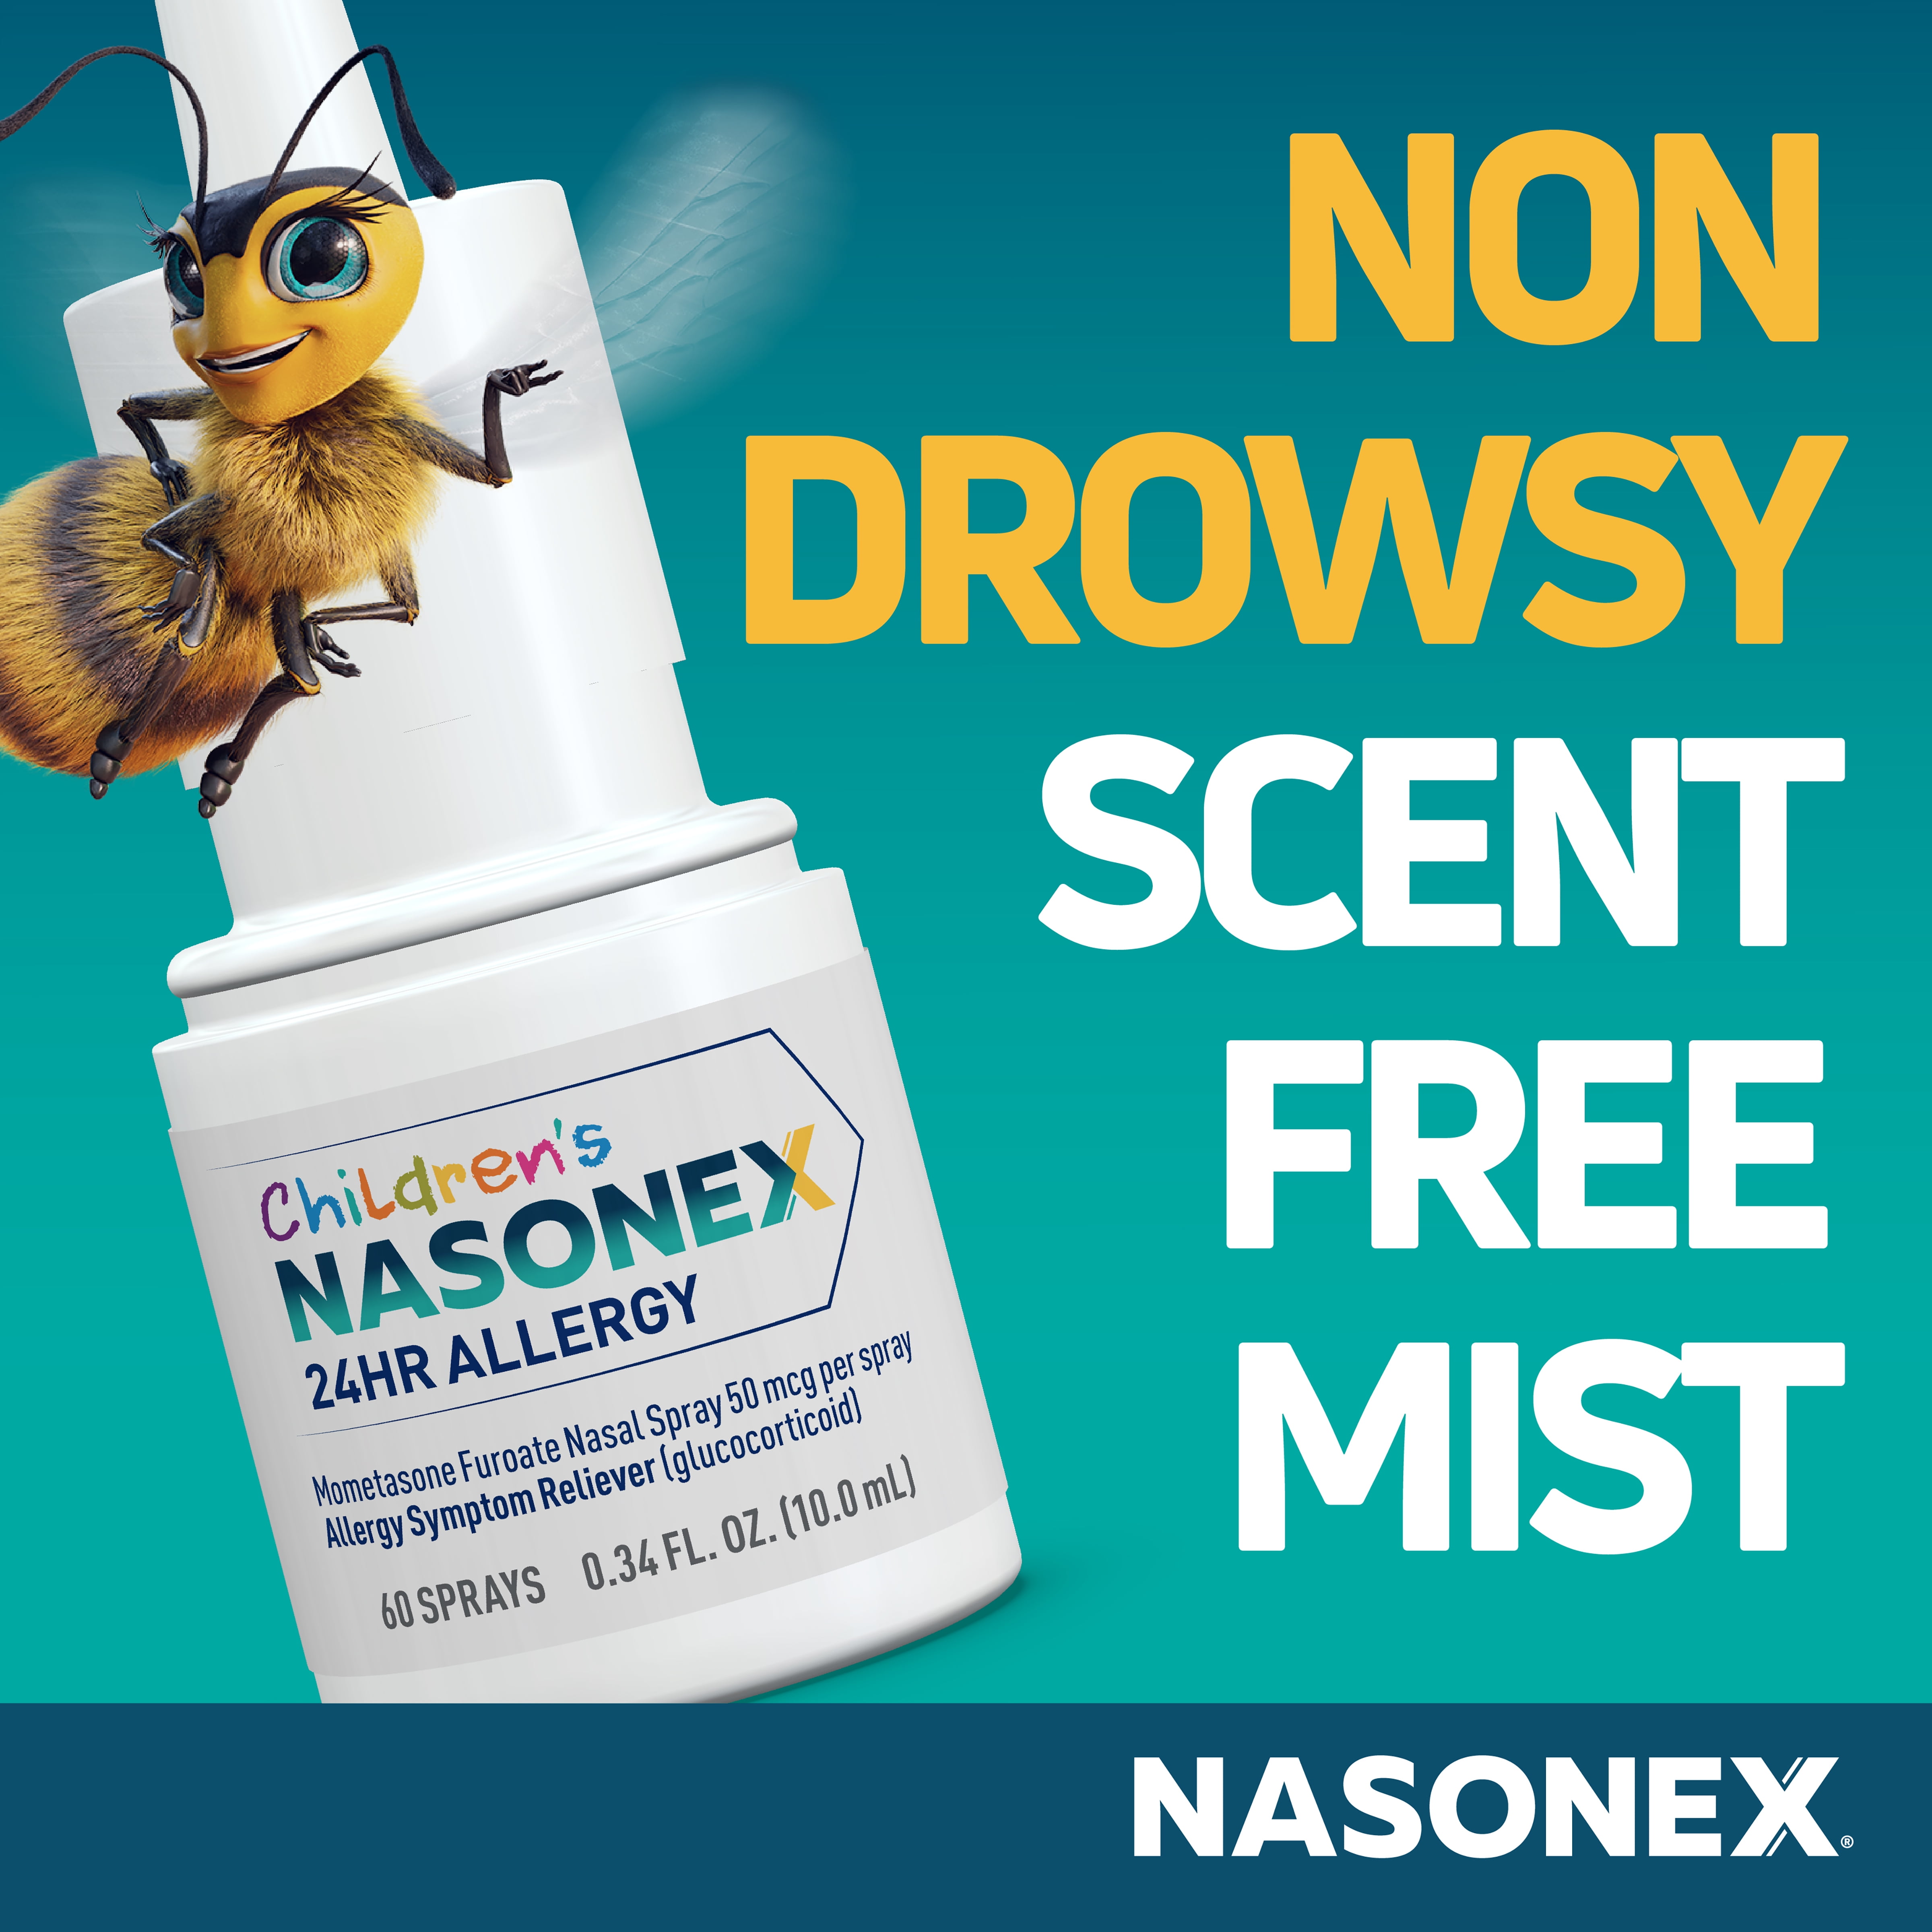  Nasonex 24Hr Allergy Nasal Spray - 60 Spray : Health & Household